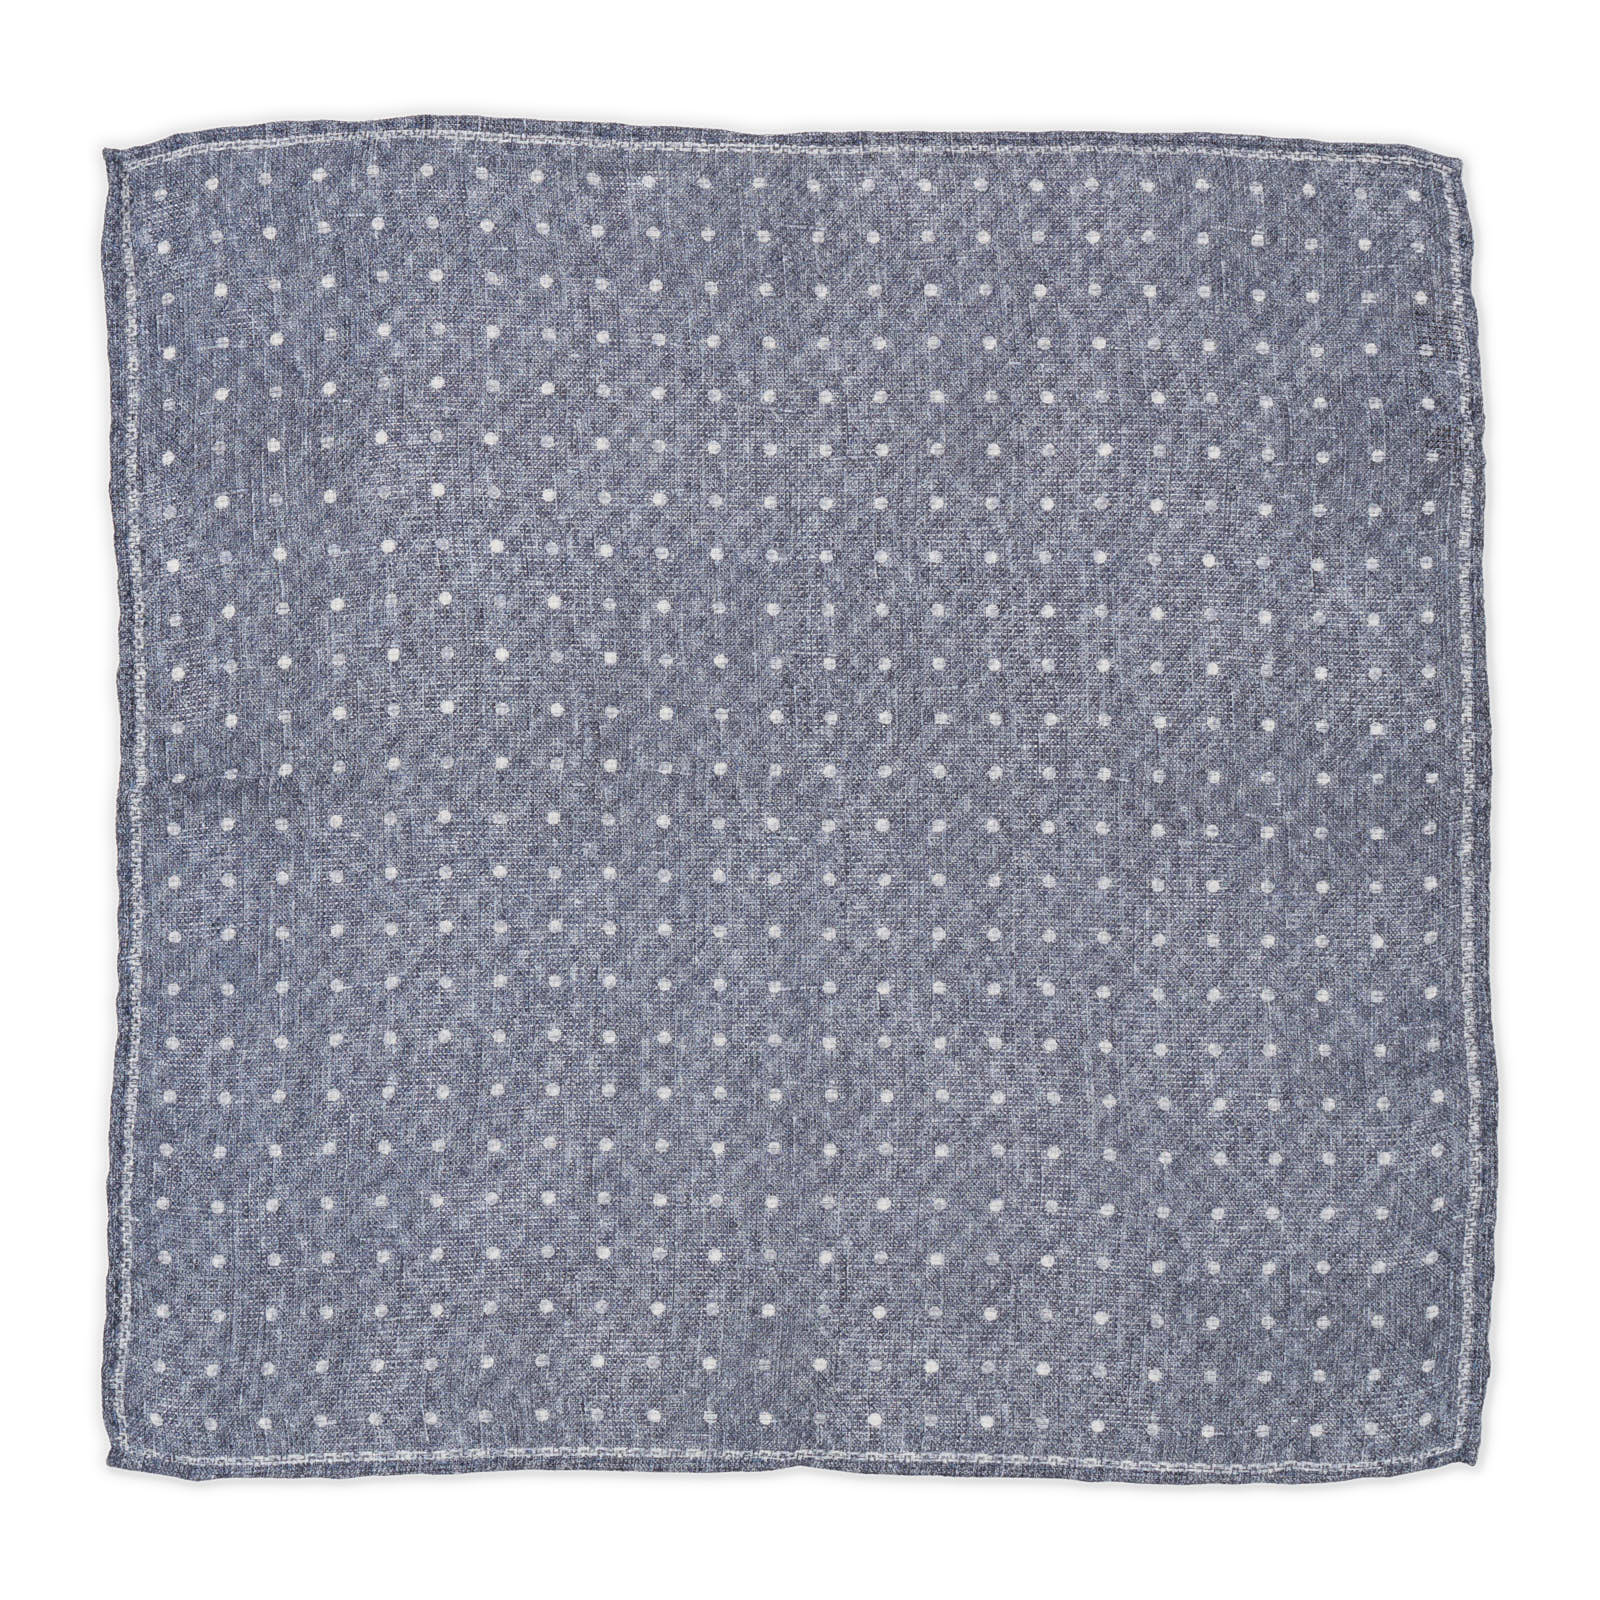 ROSI Handmade Royal Blue Dot-Plaids Linen-Cotton Pocket Square NEW 31cm x 30cm